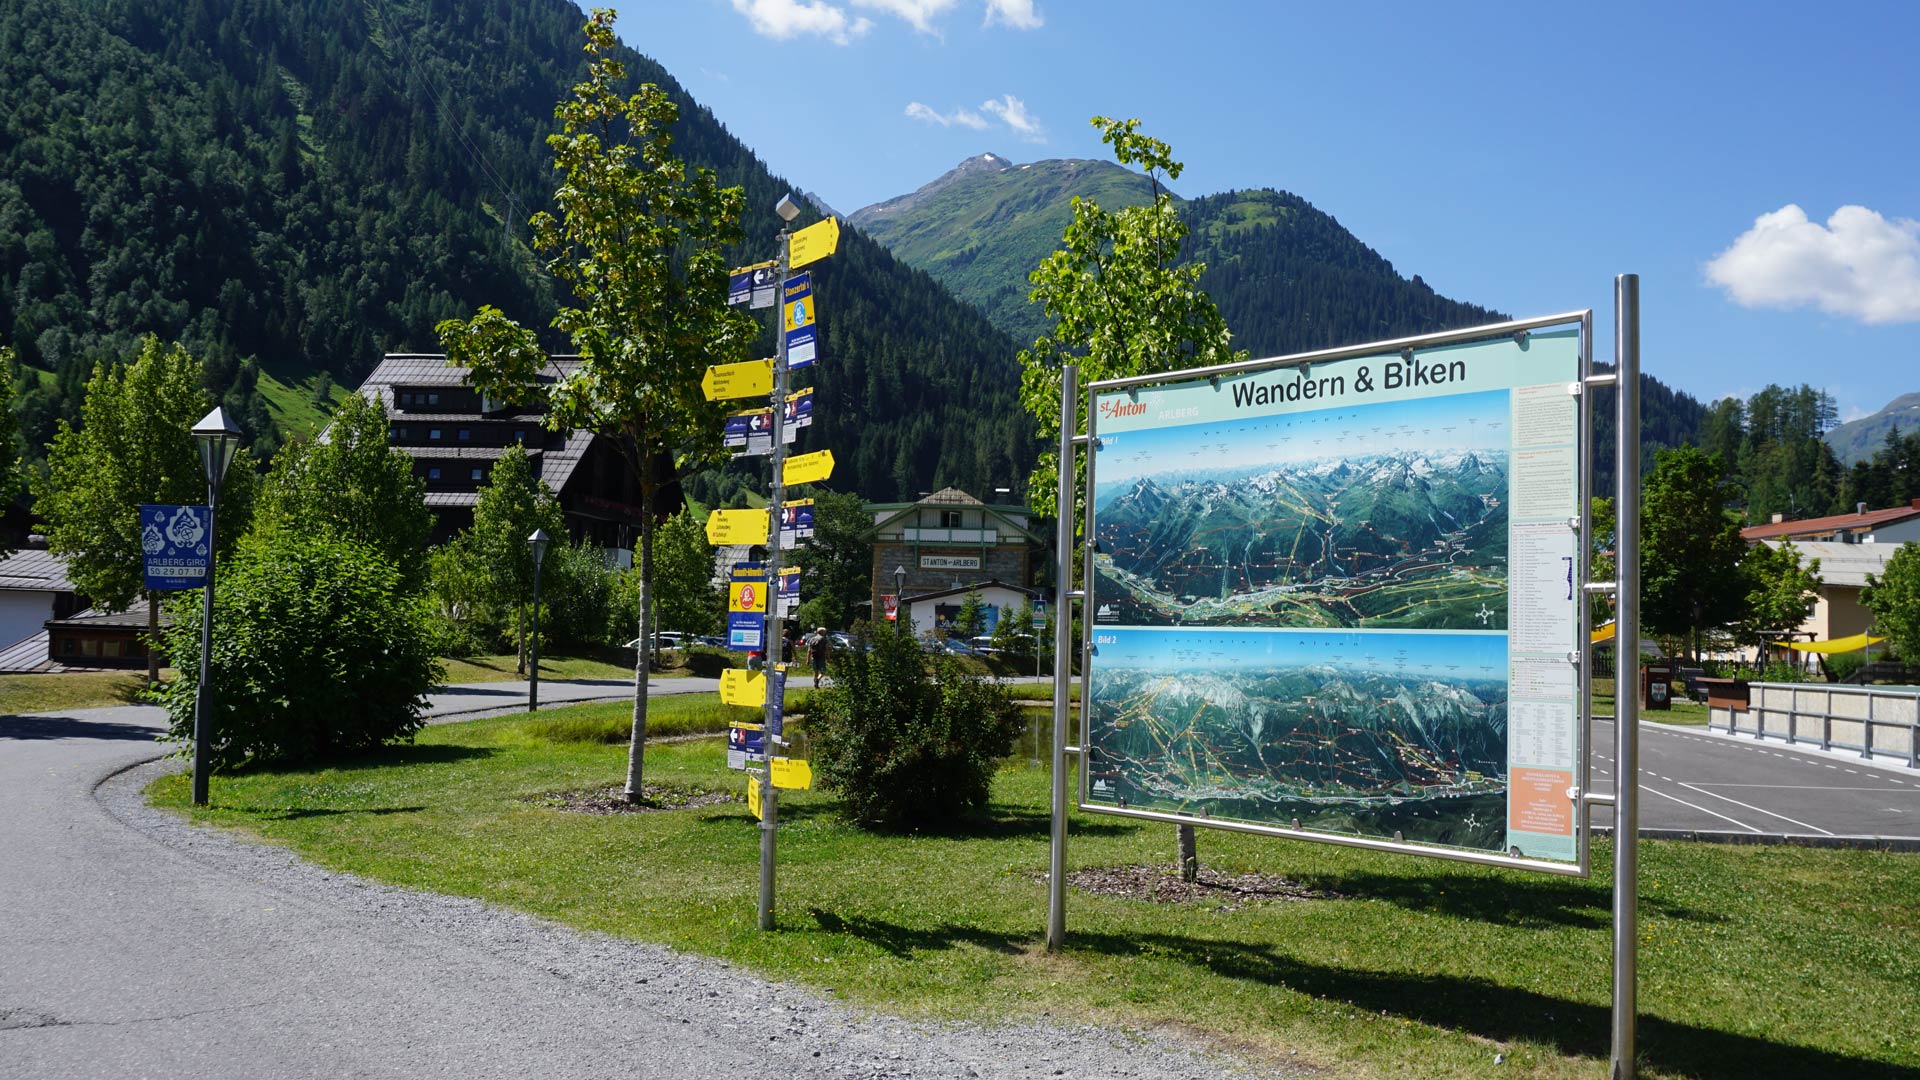 30 Party Hiltl Sankt Anton Am Arlberg, Events Fr Singles 